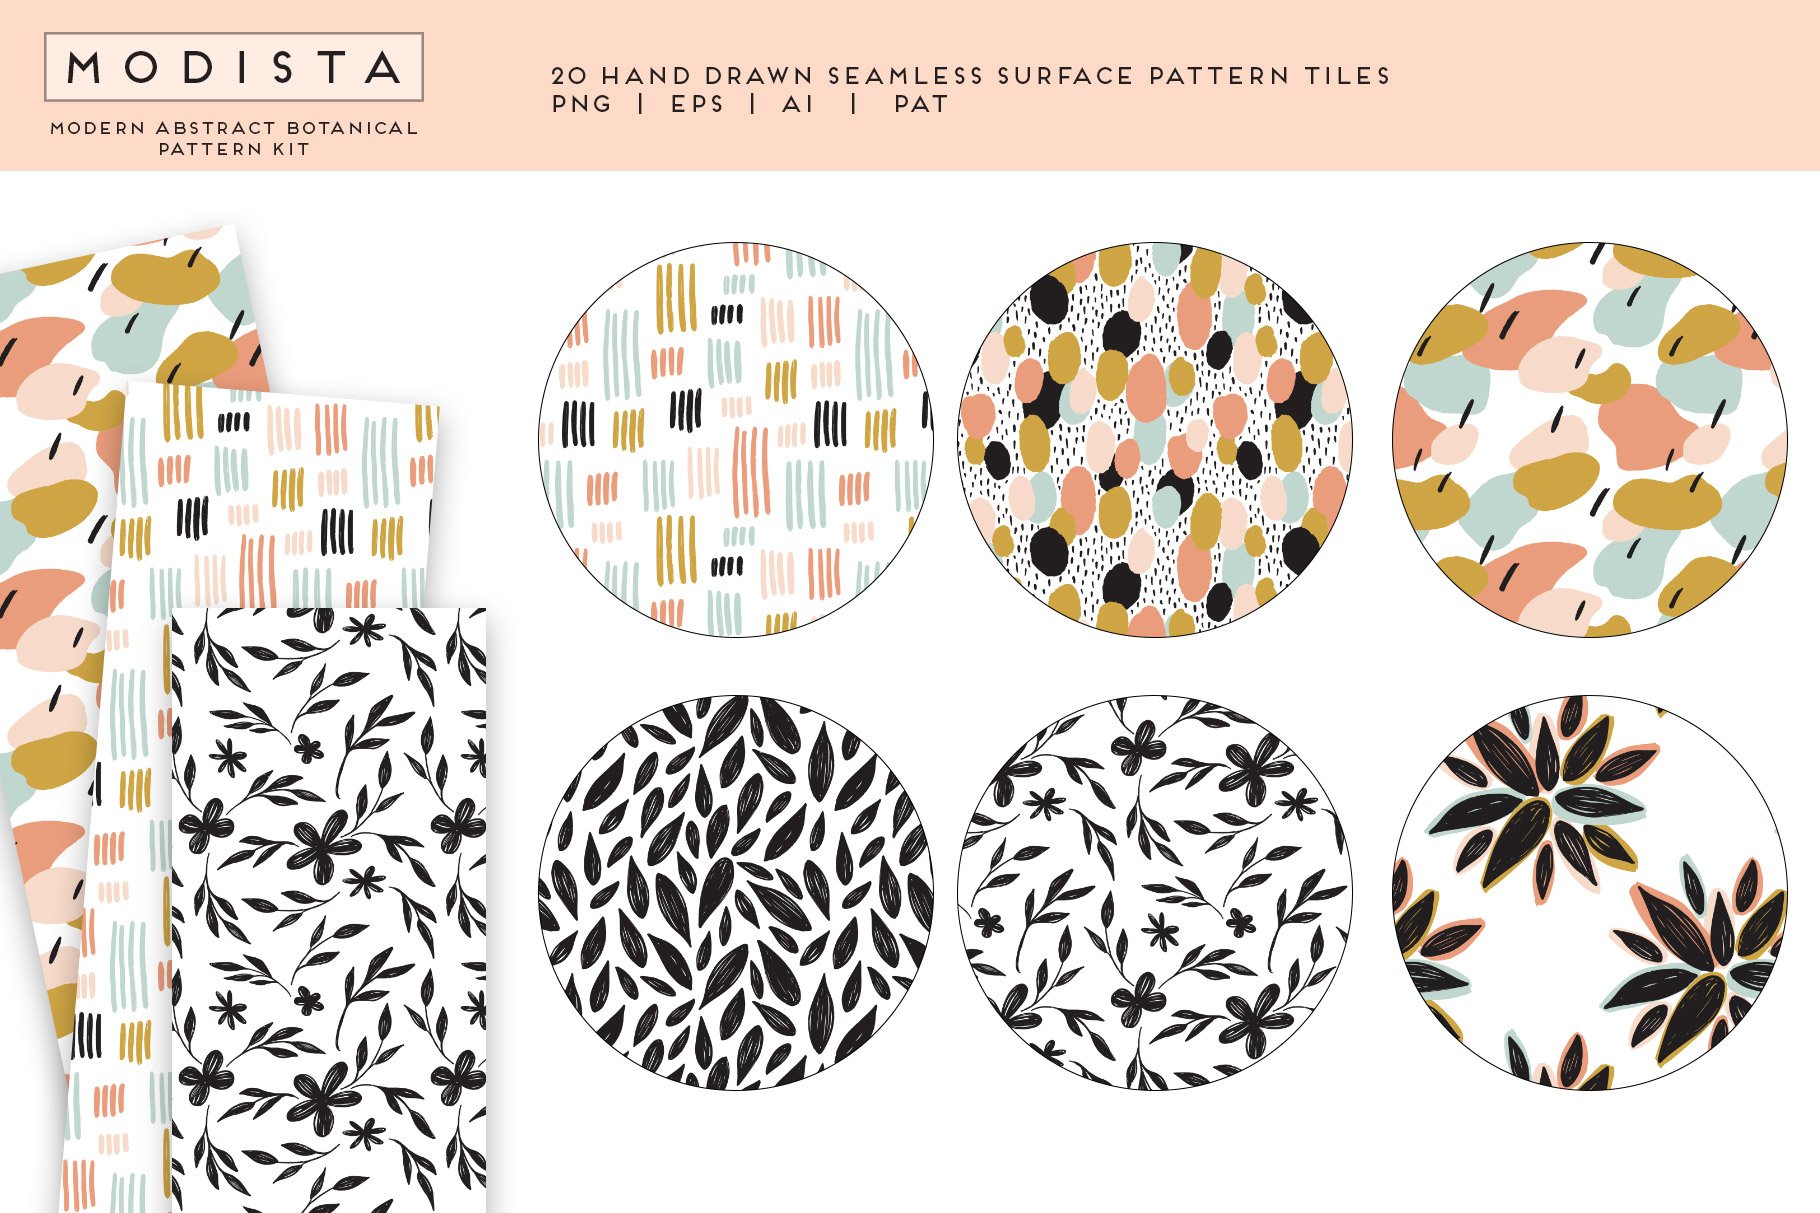 Modista Abstract Botanical Pattern Kit